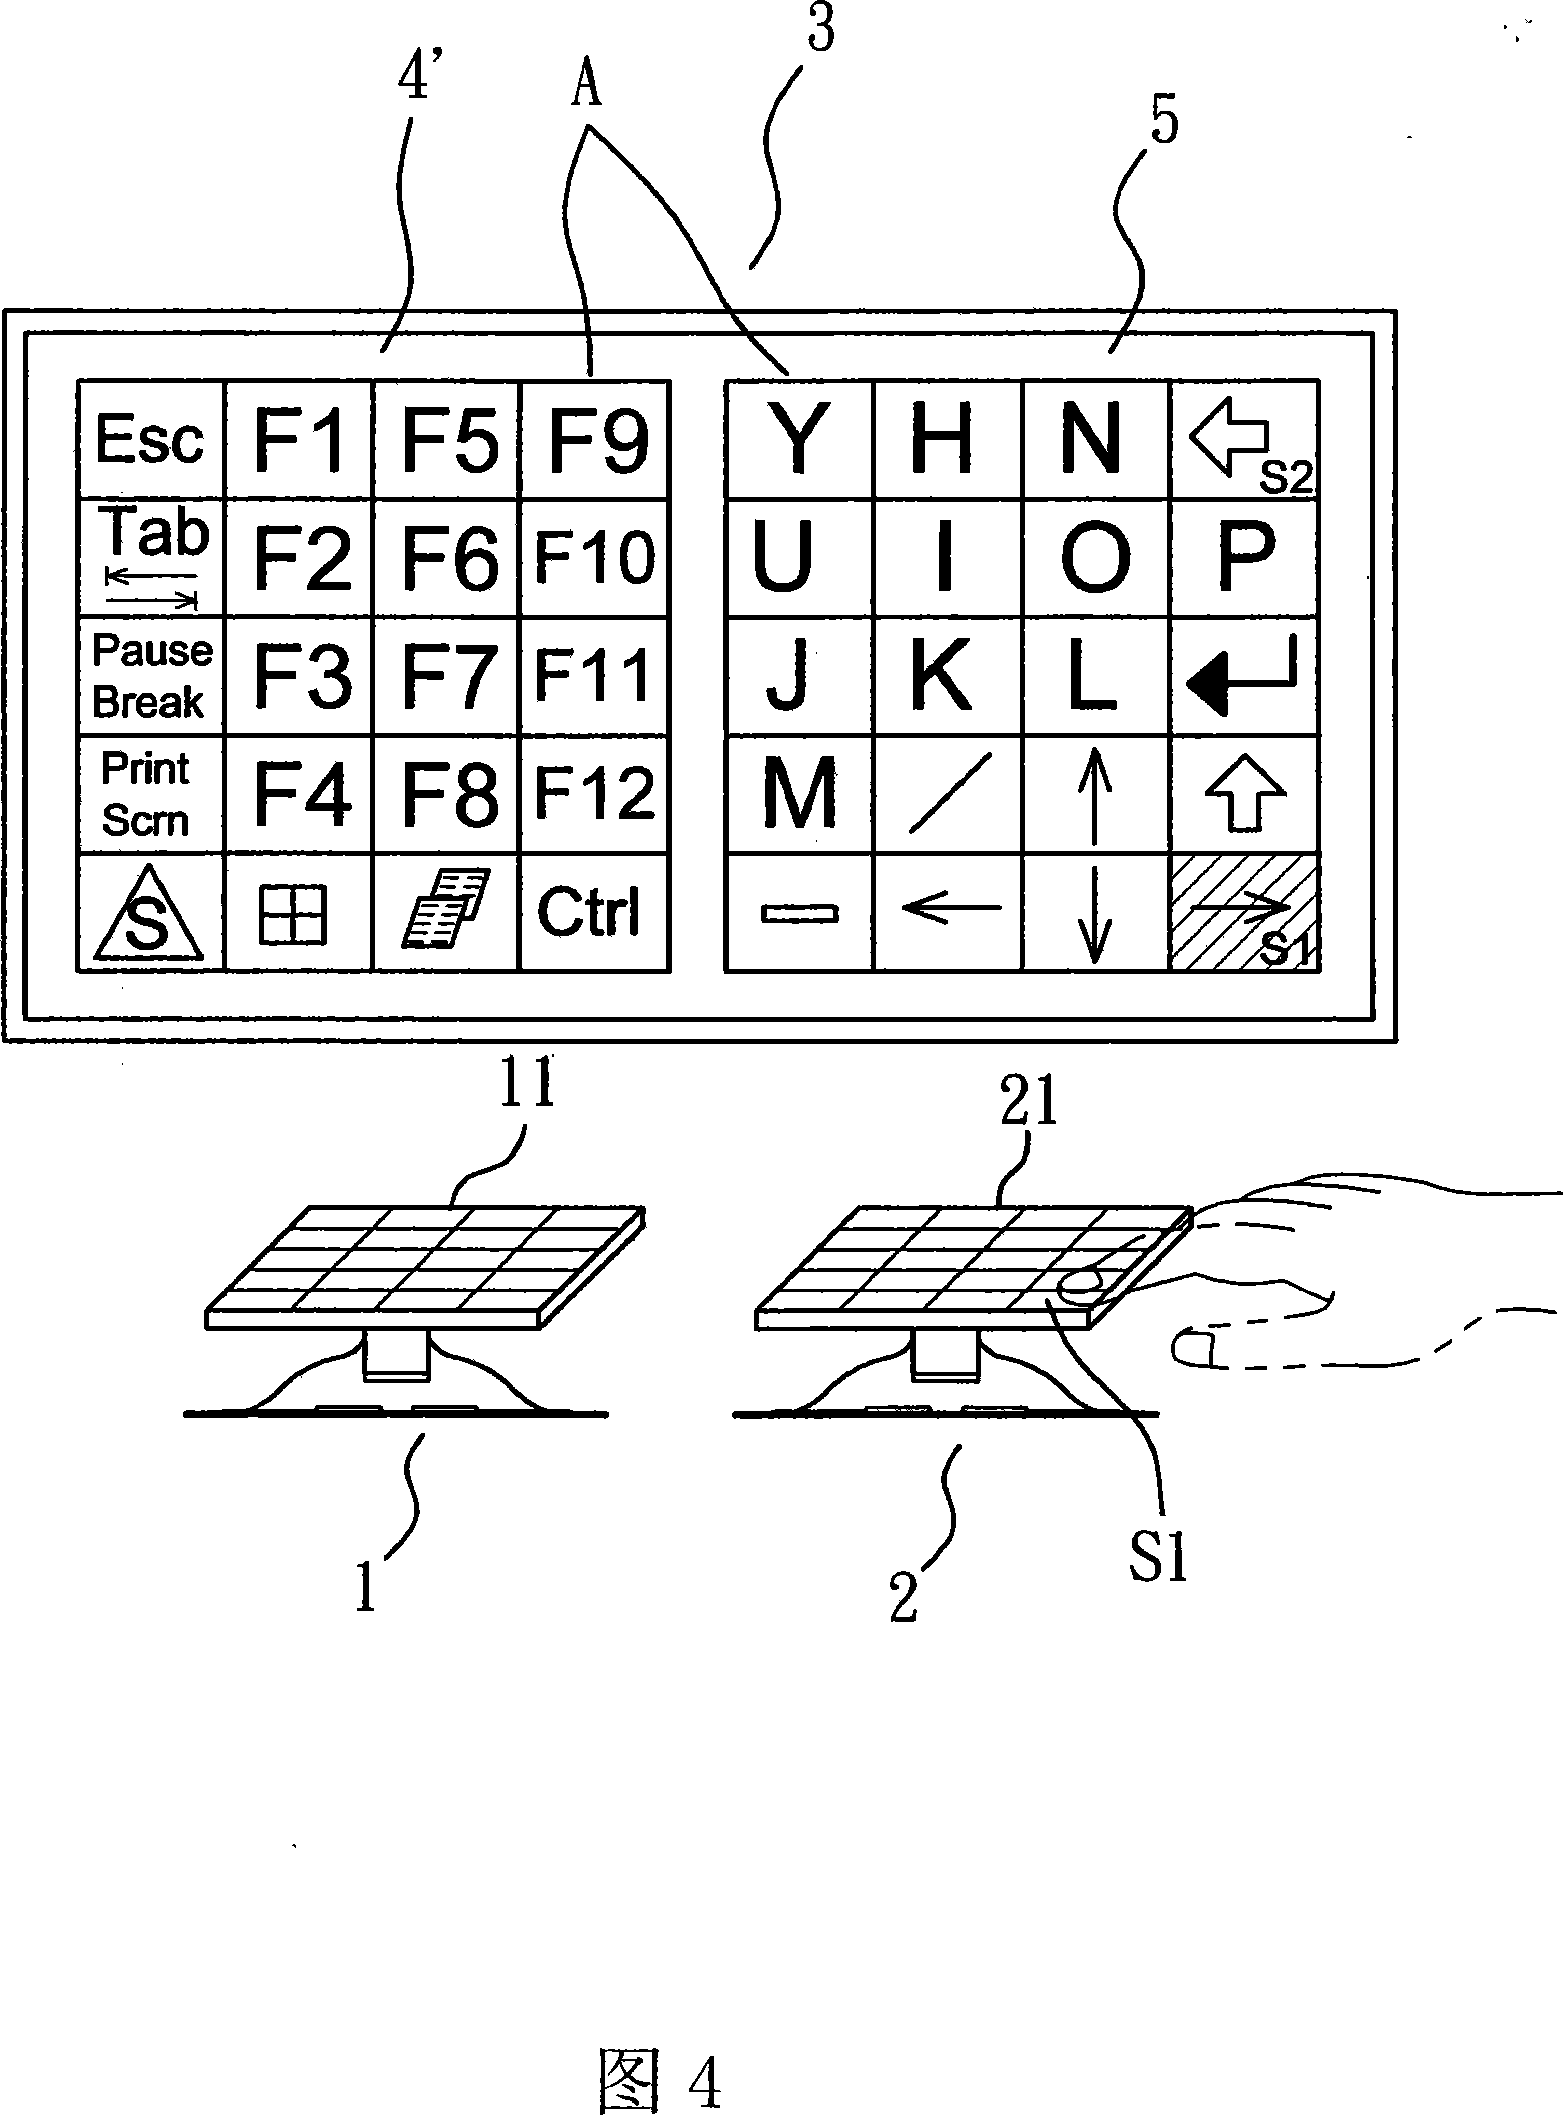 Downsizing keyboard of composite key